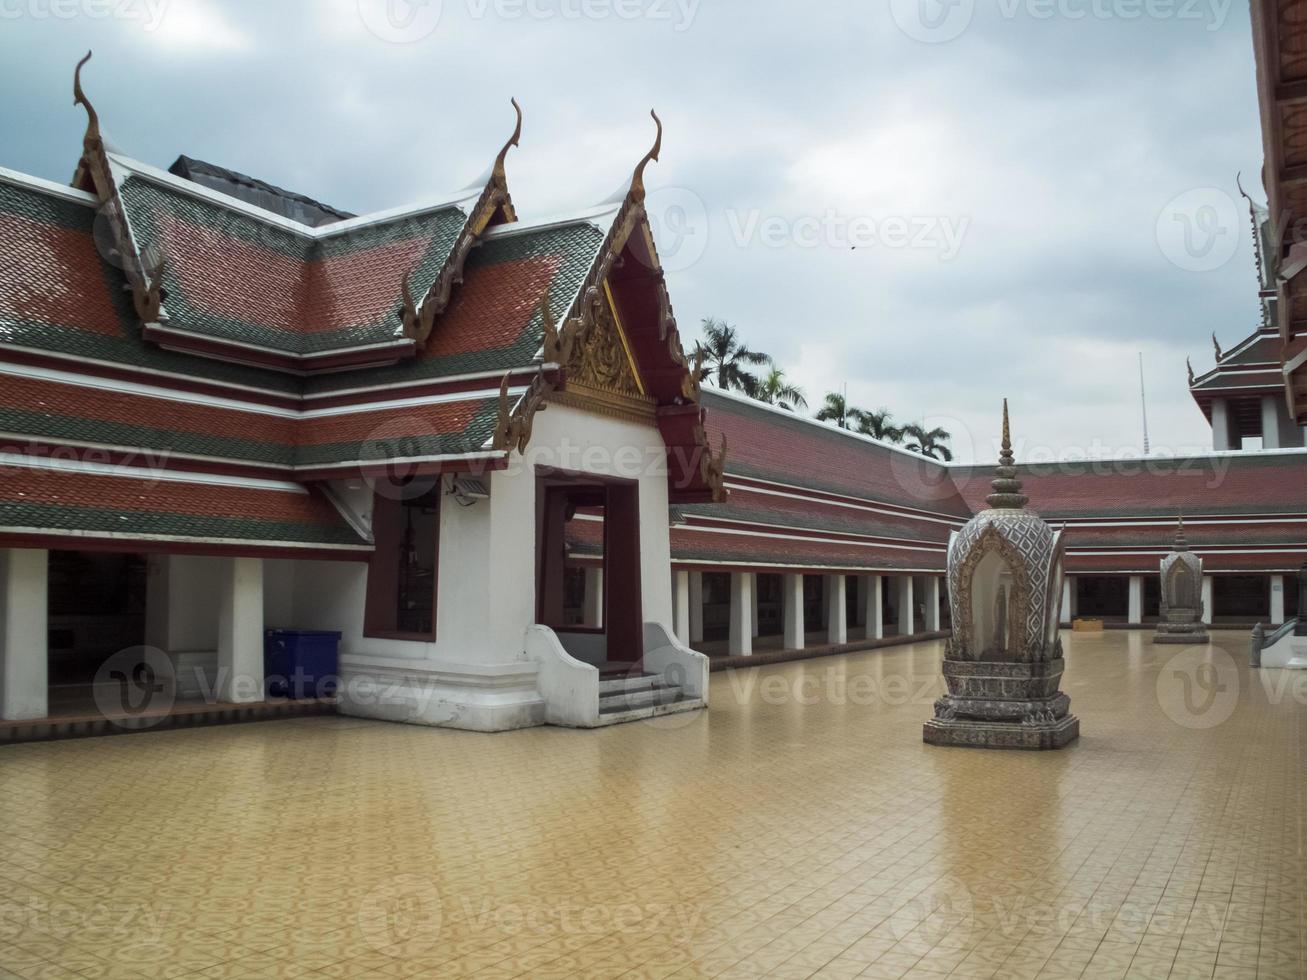 Wat Saket Ratcha Wora Maha Wihan Bangkok Thailand. Der Tempel Wat Sa Ket ist ein alter Tempel aus der Ayutthaya-Zeit. foto